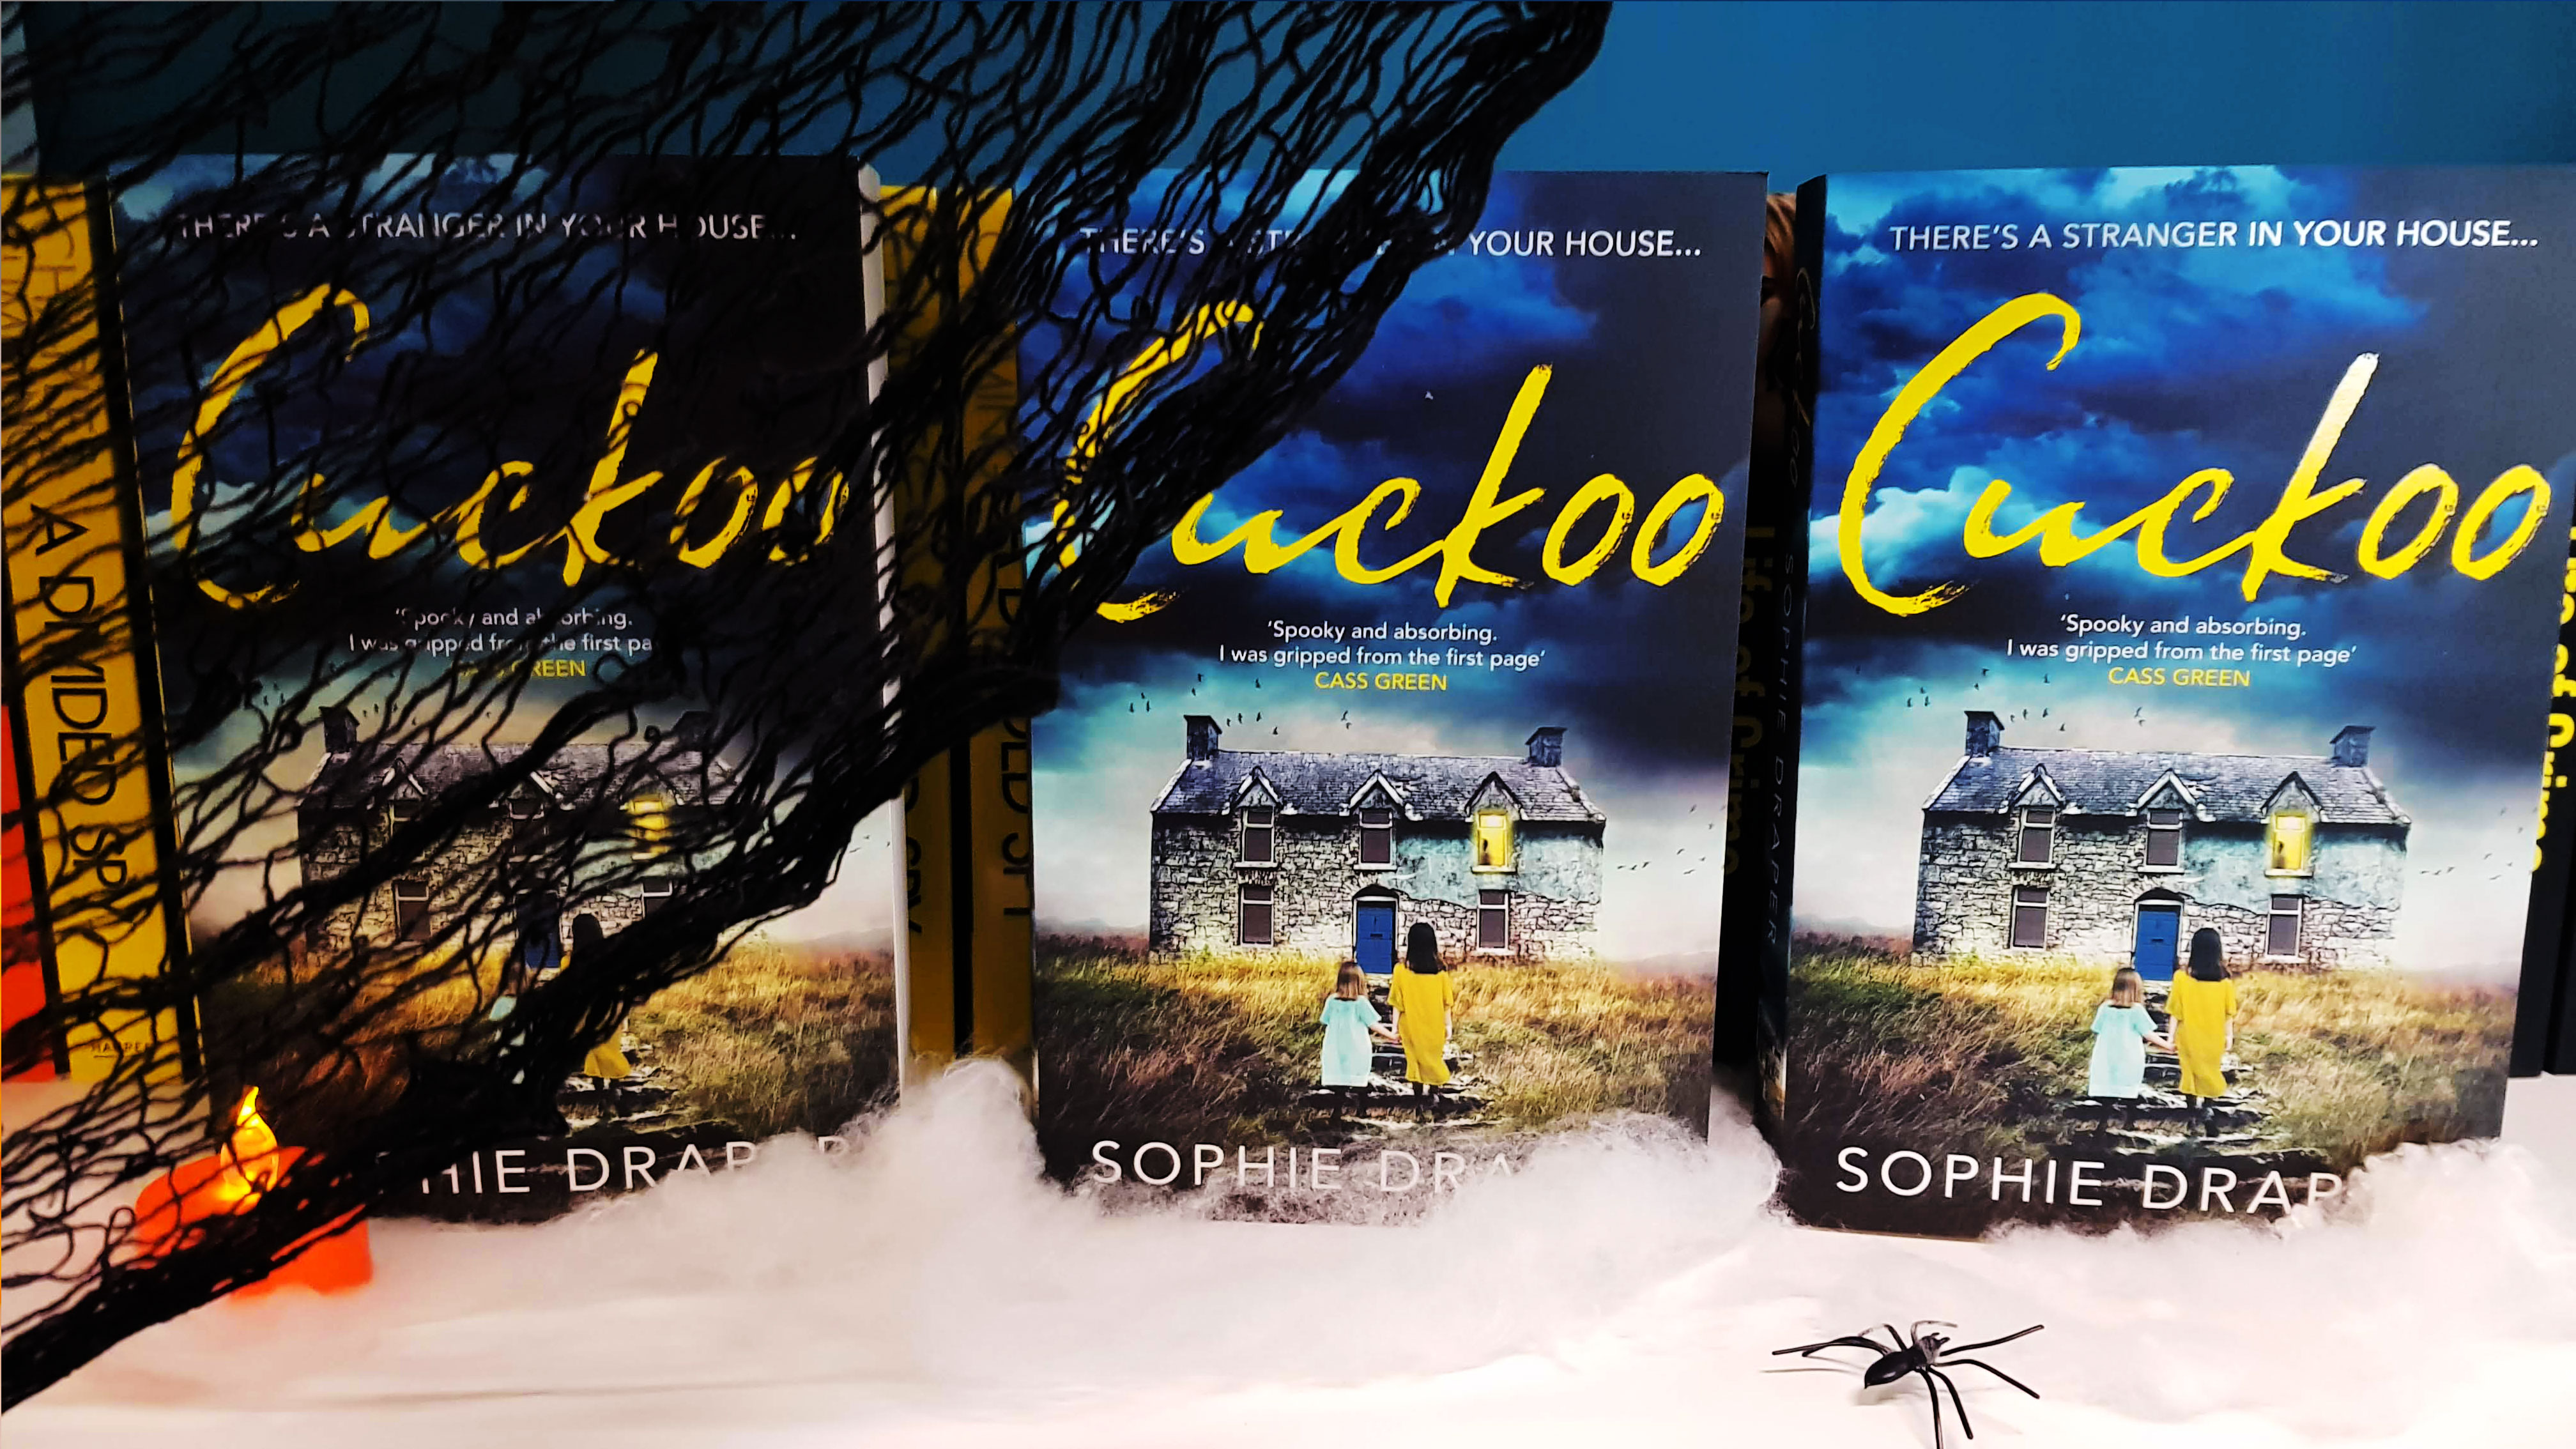 Halloween story - Cuckoo by Sophie Draper